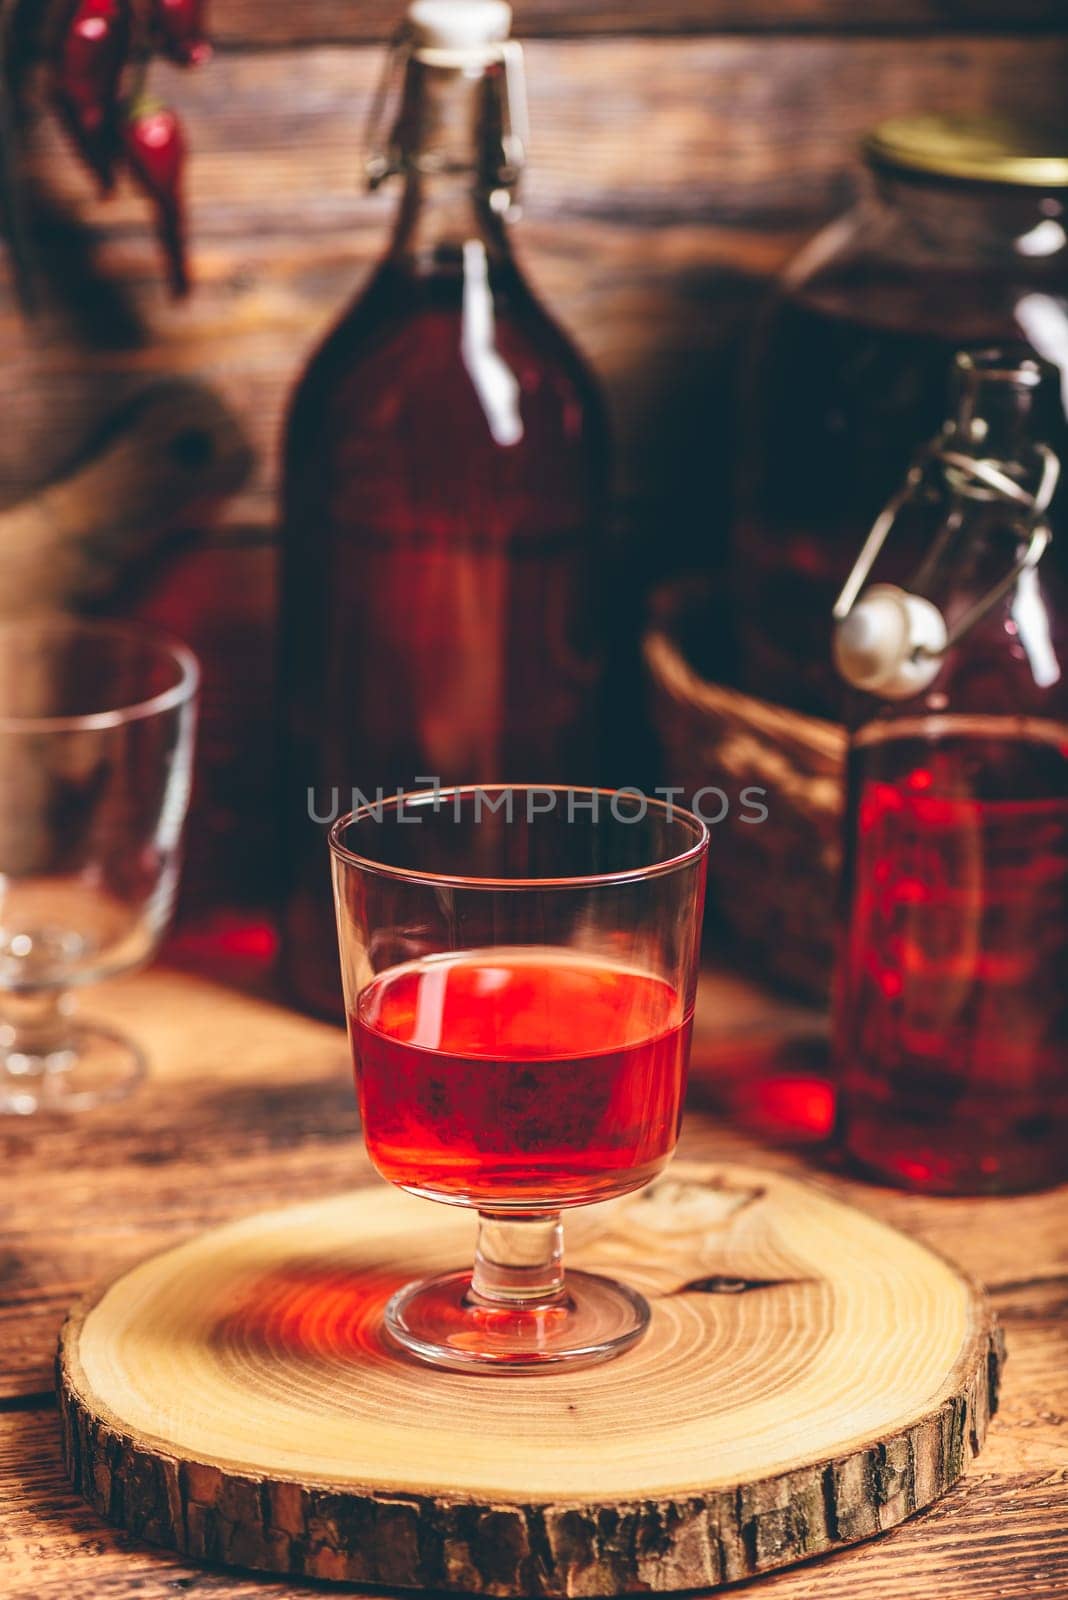 Homemade red currant liquor by Seva_blsv